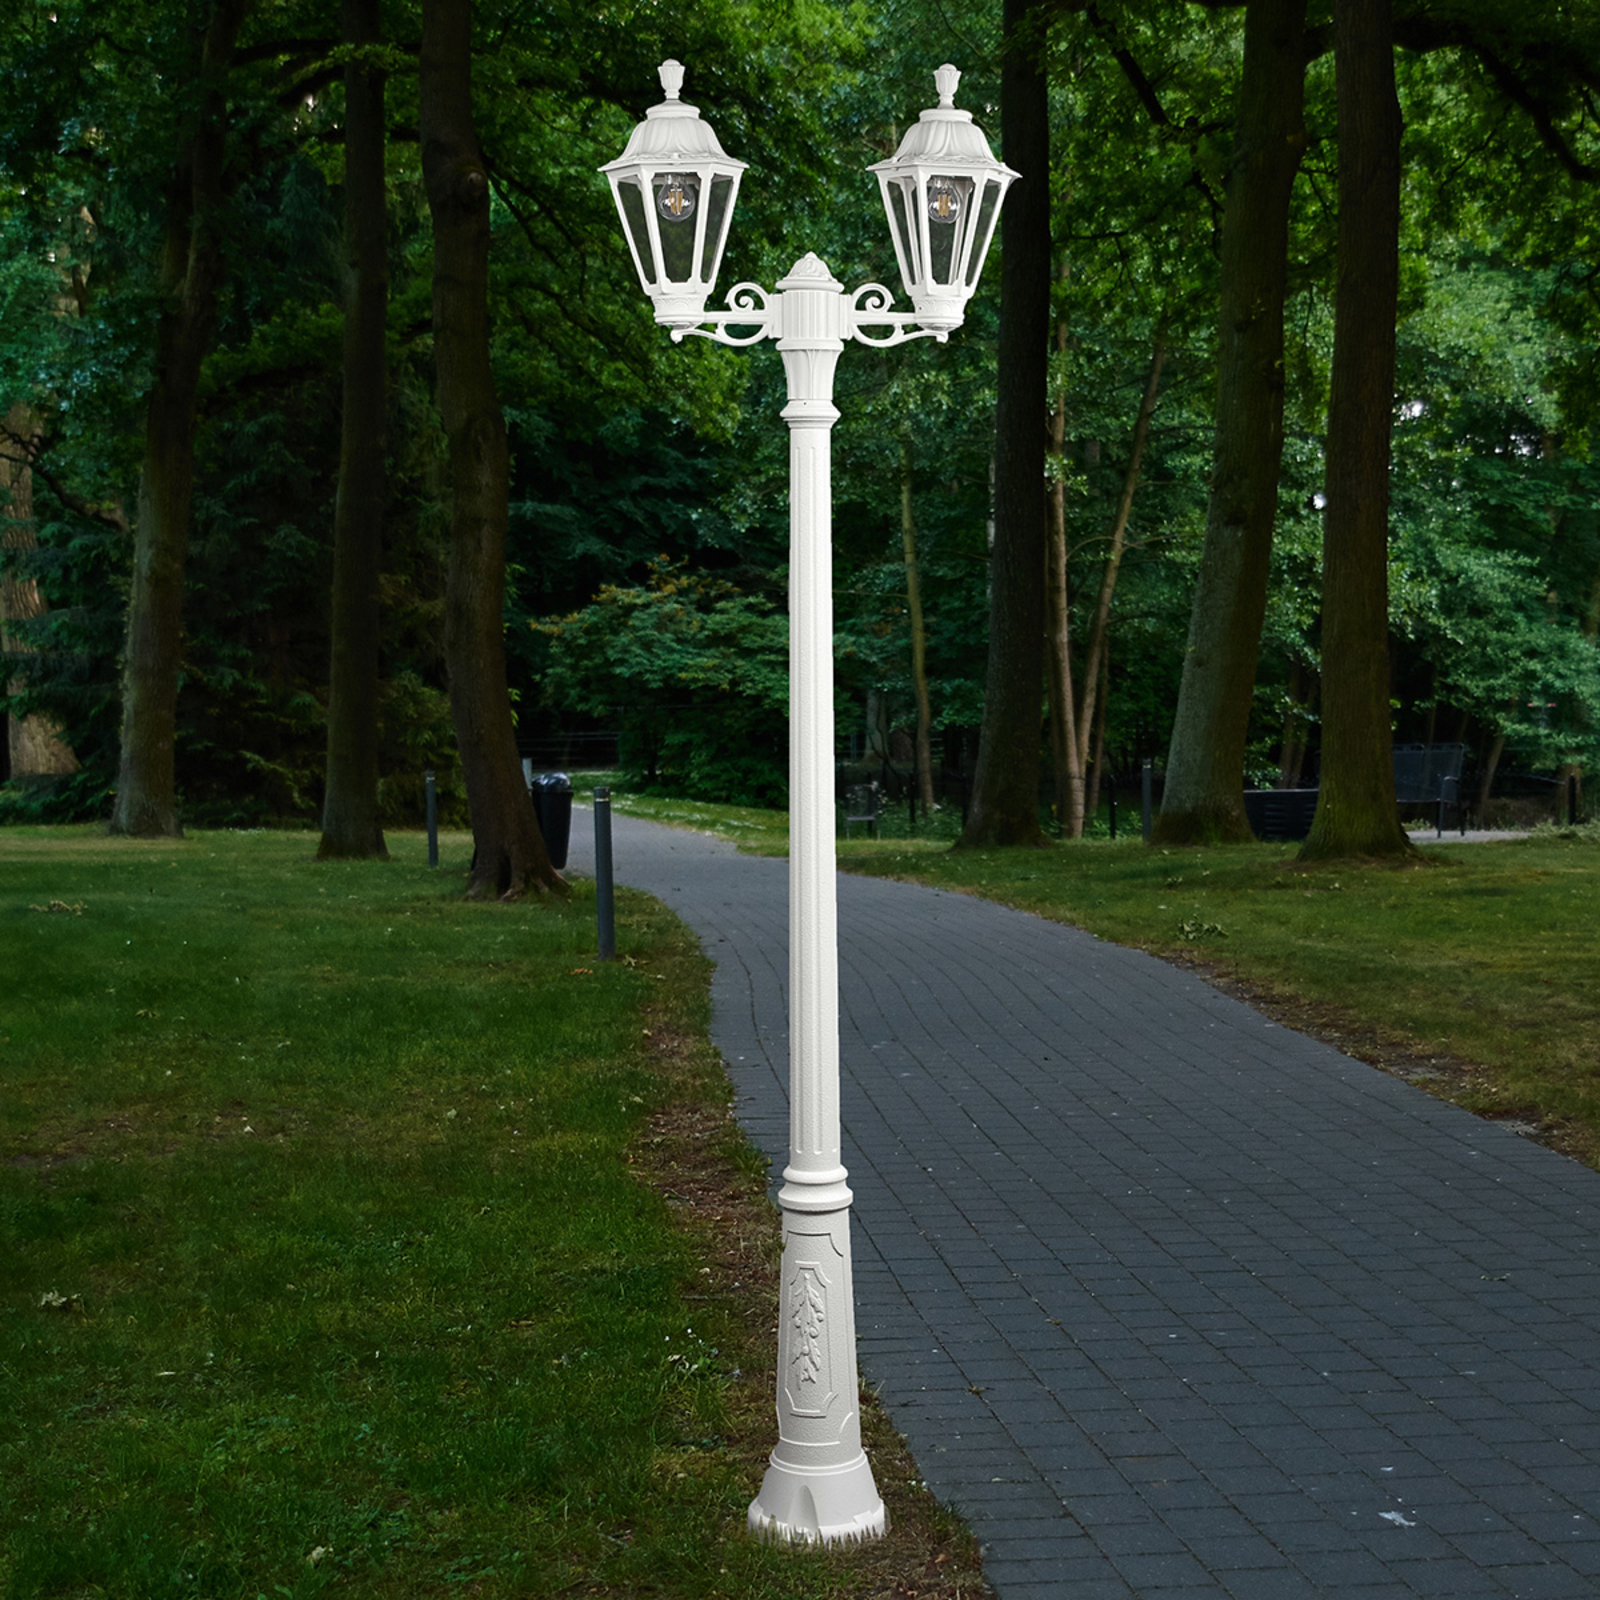 Lampione LED Artu Rut a 2 luci E27 bianco